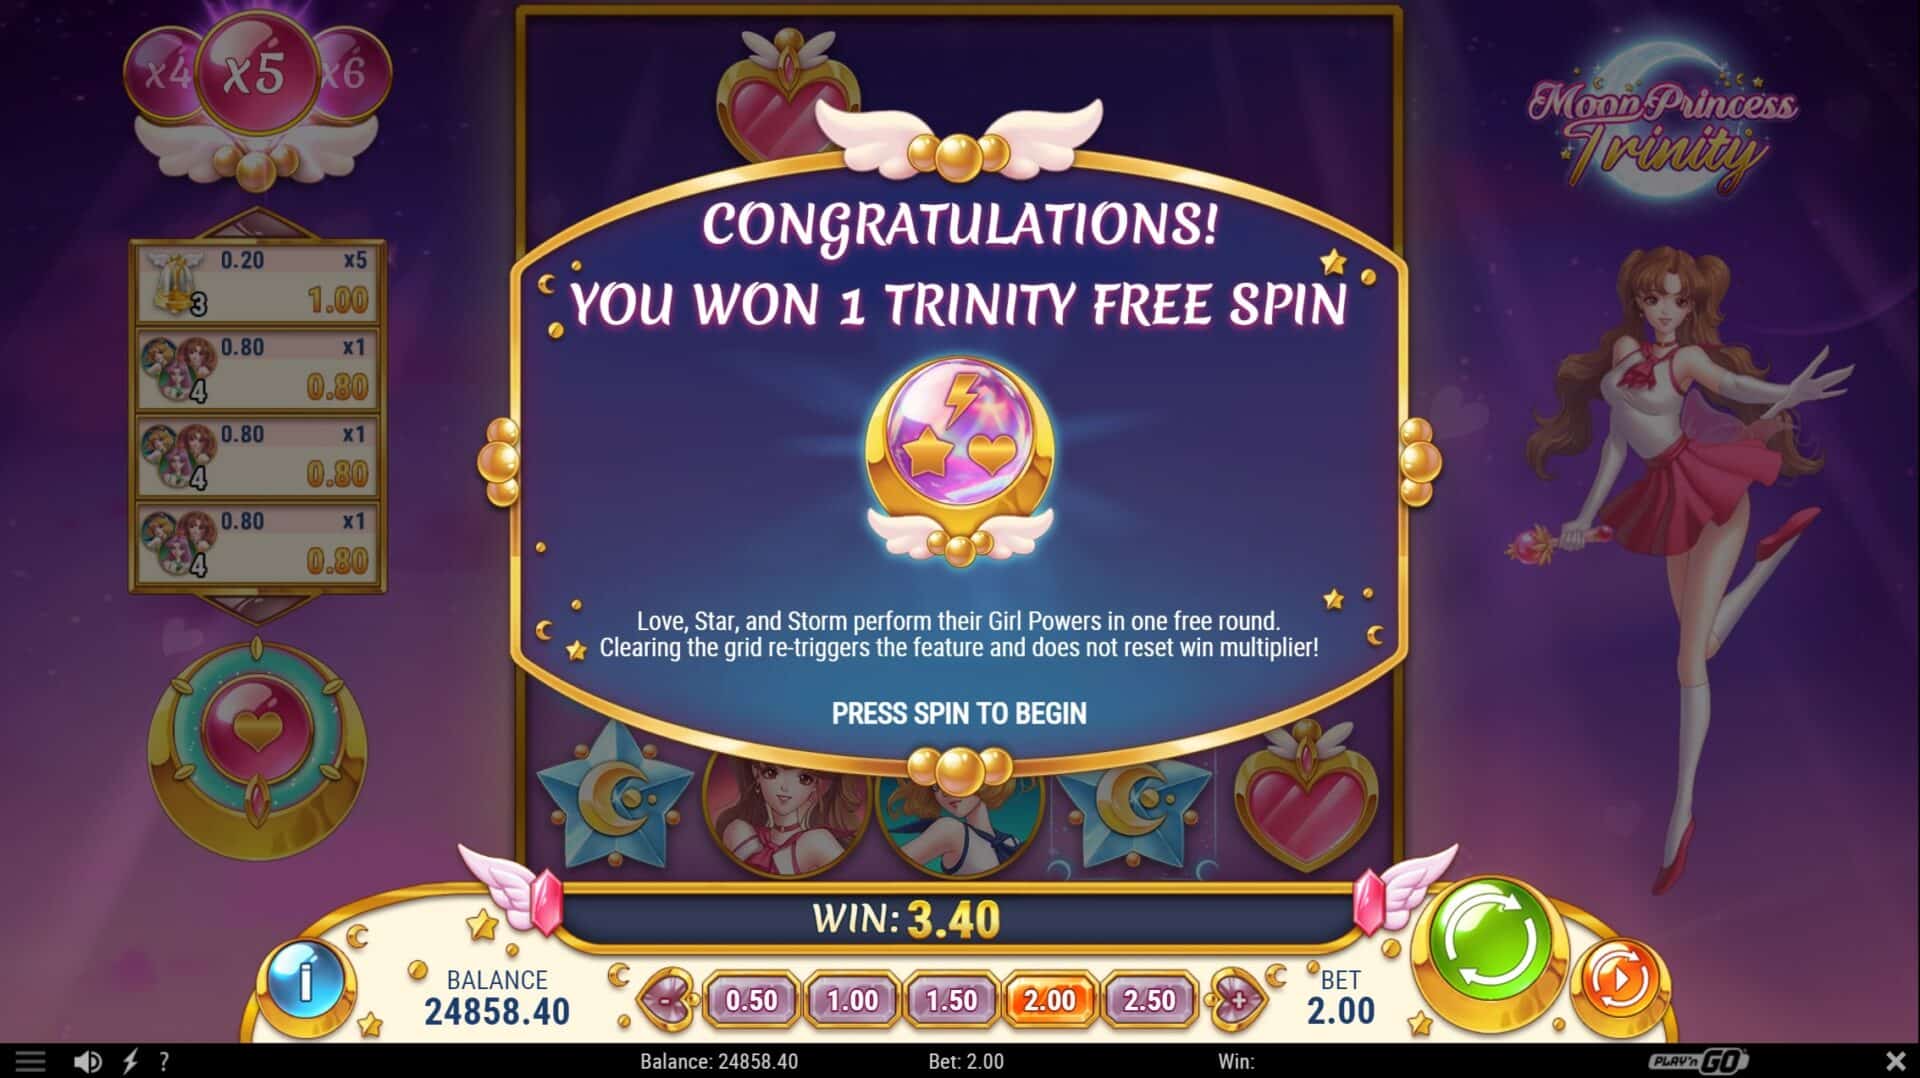 Moon Princess Trinity - Free Spin